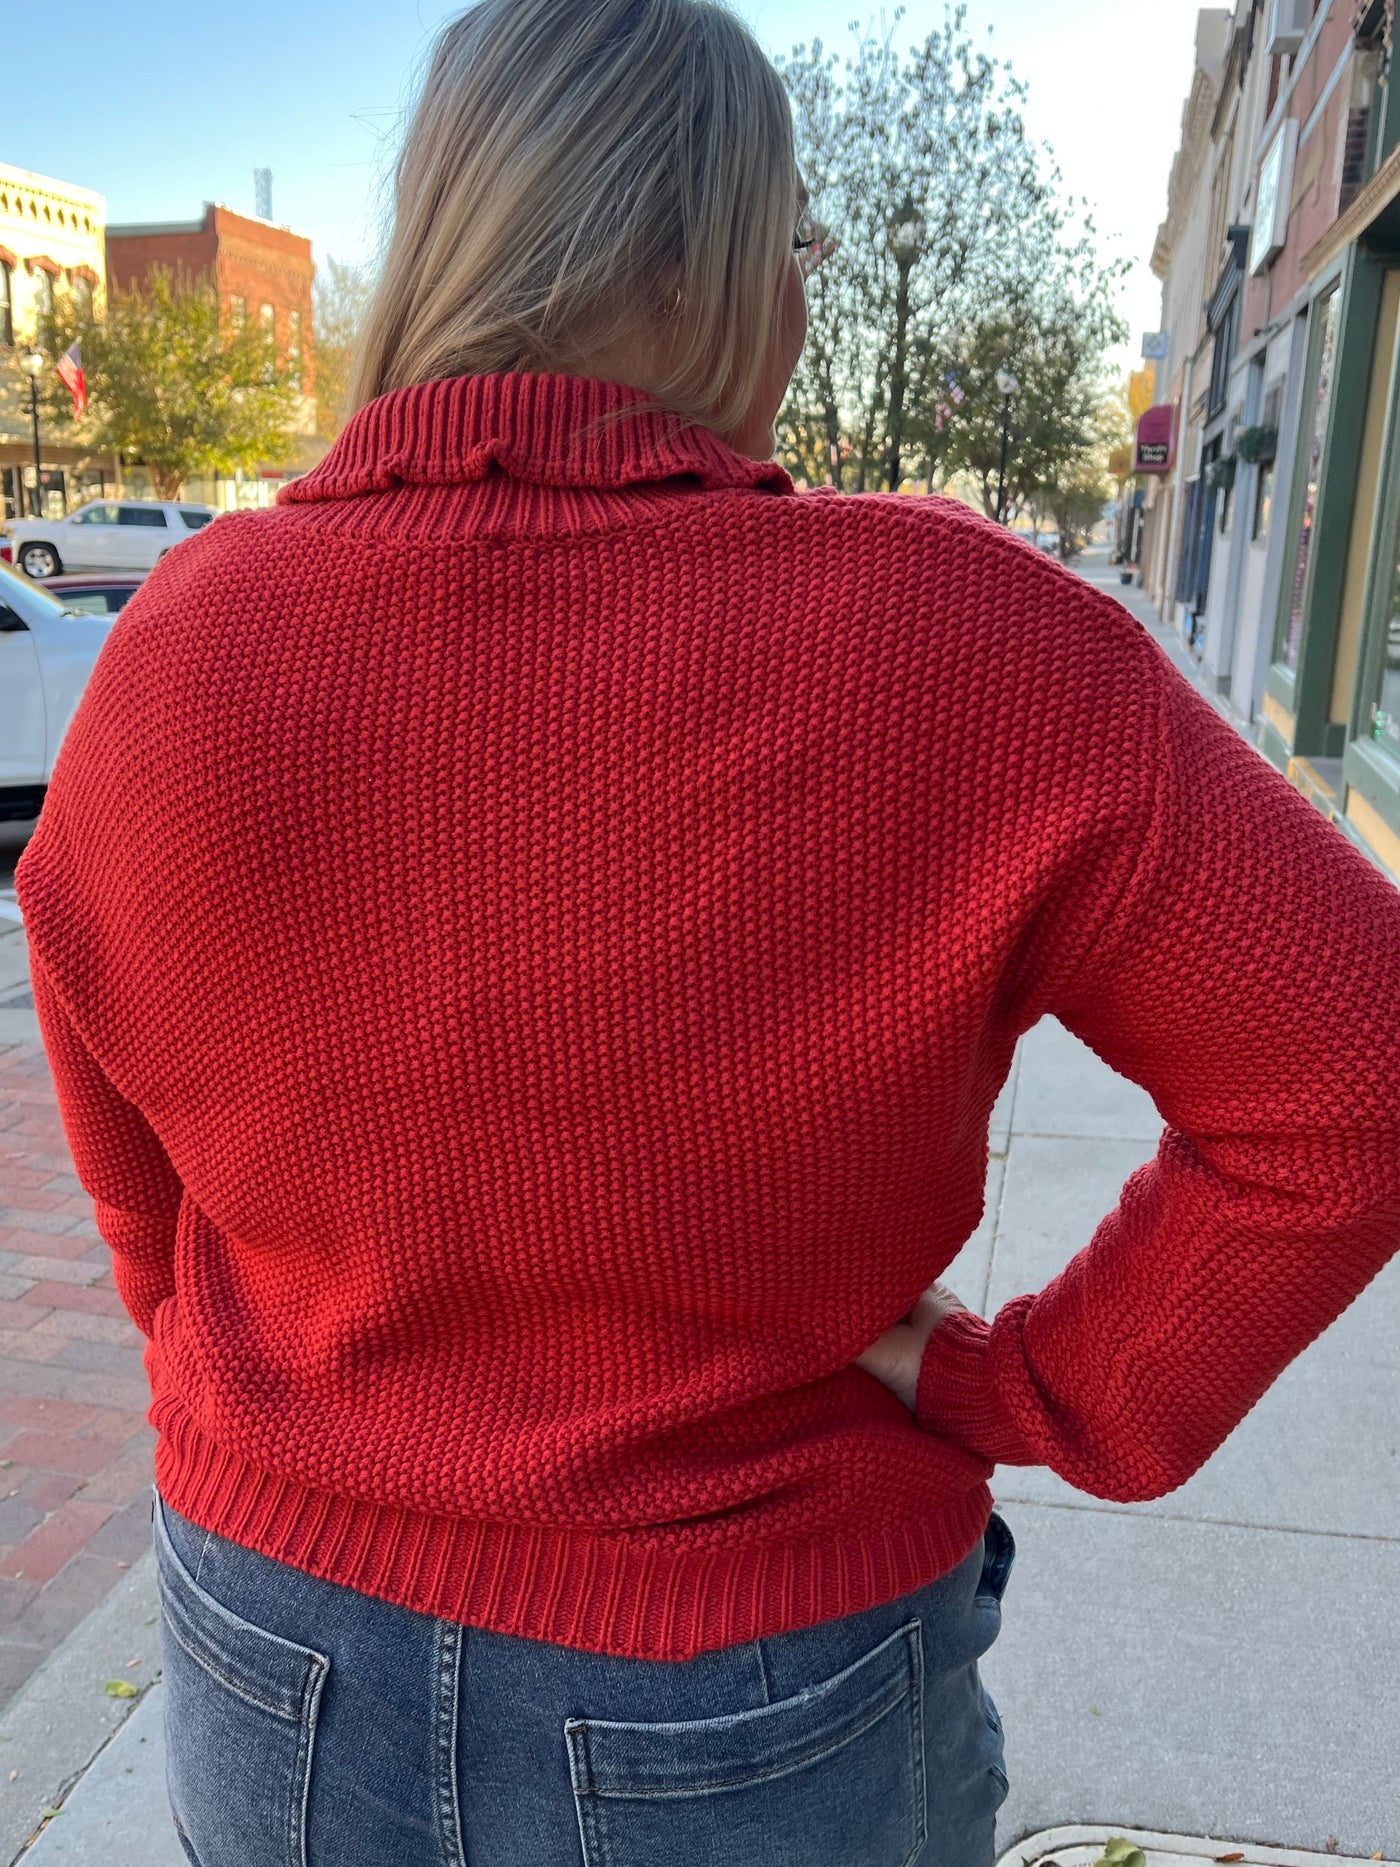 Rust Henley Sweater